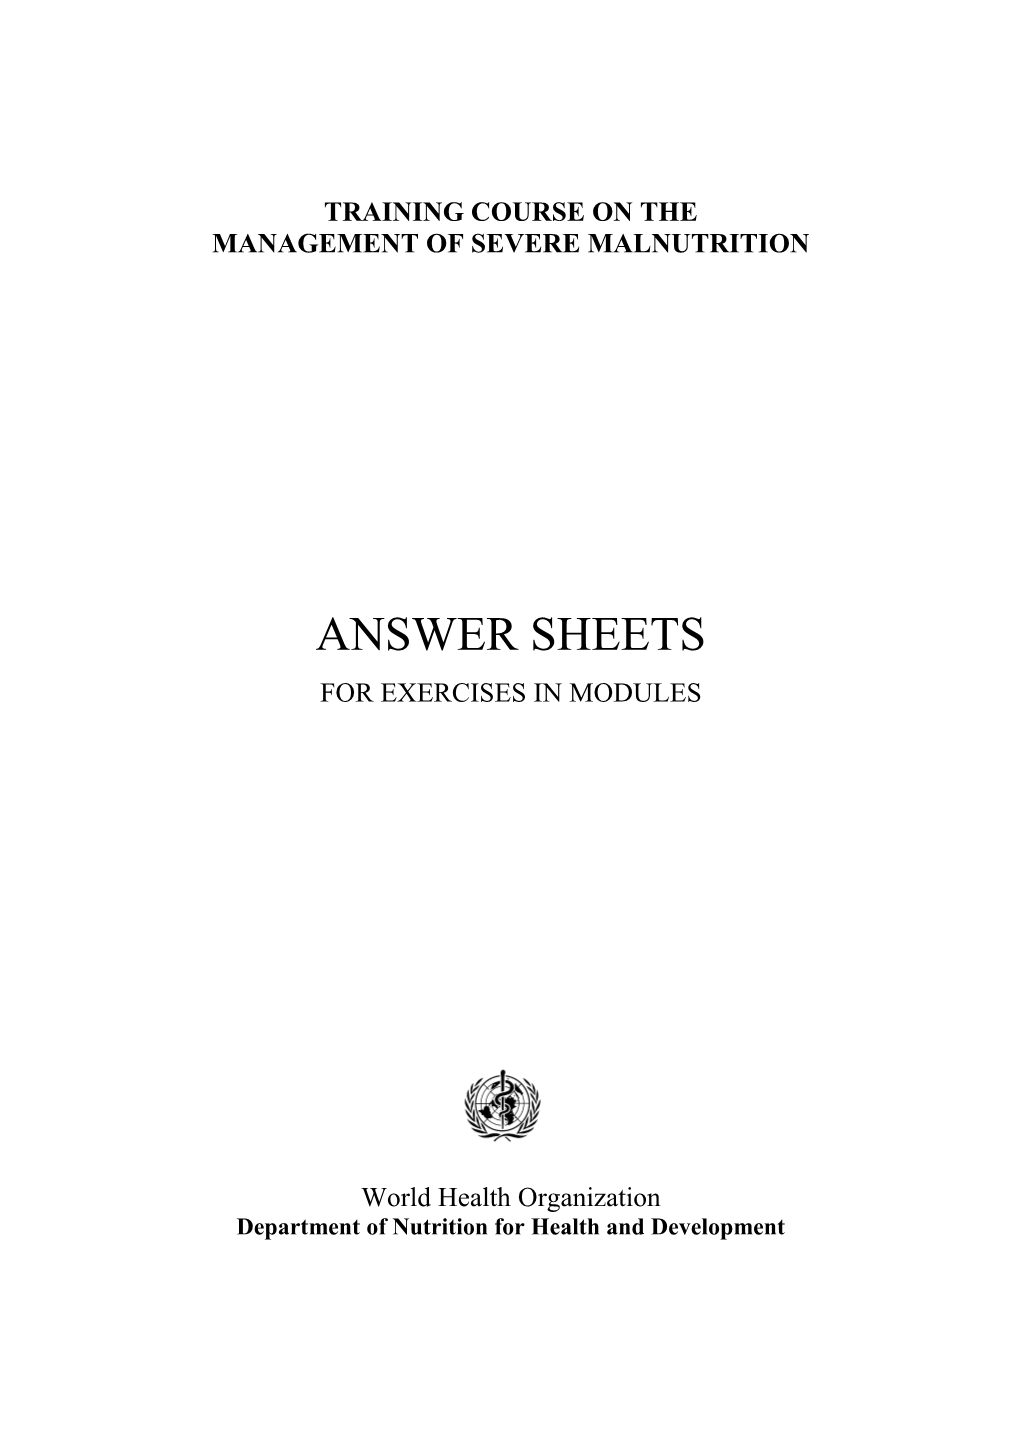 Management of Severe Malnutrition